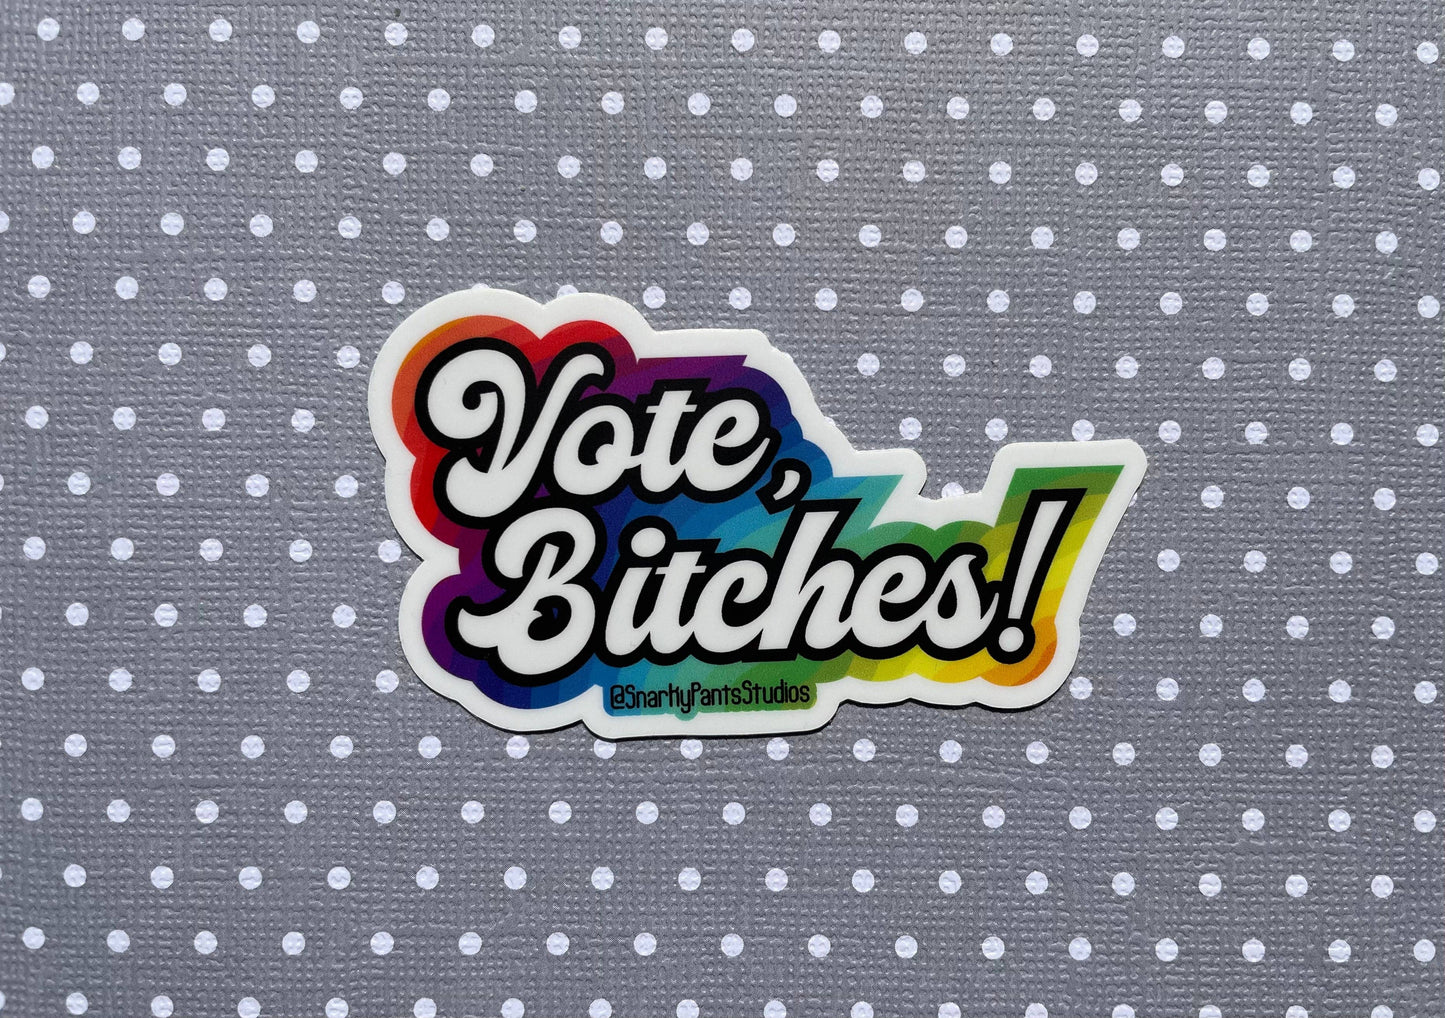 Stickers: Vote, bitches!